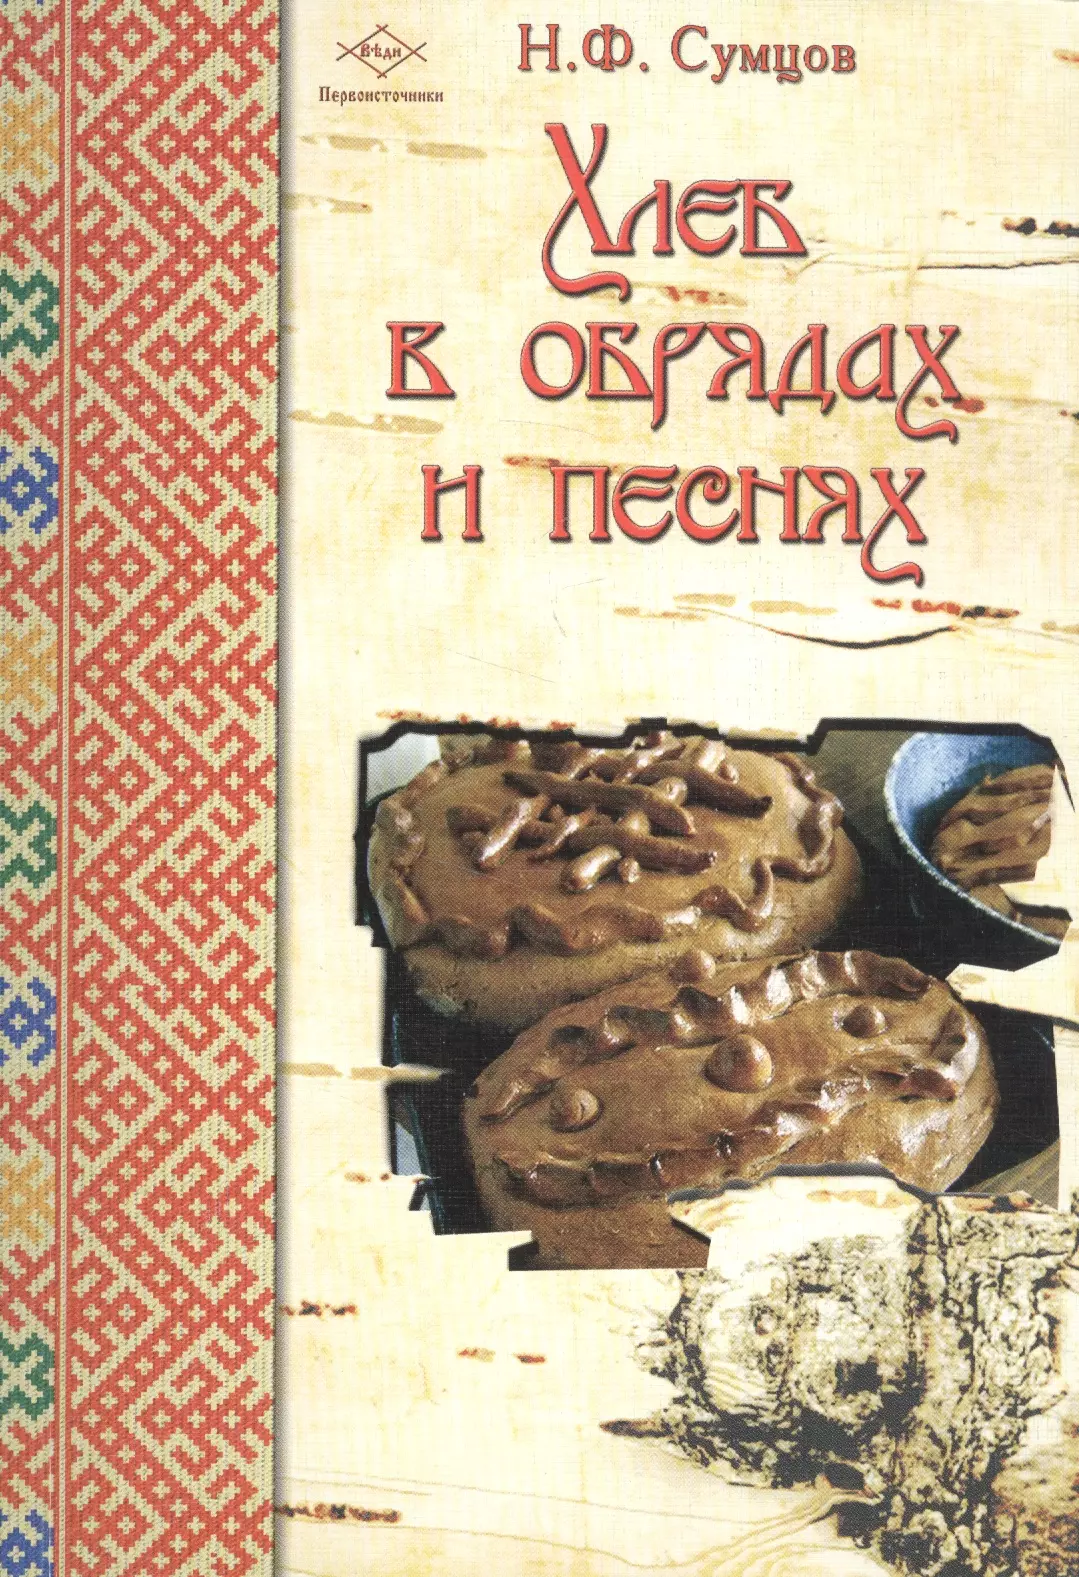 Книги про хлеб. Книги о хлебе. Детские книги о хлебе. Советская книги про хлеб. Обложка книги про хлеб.